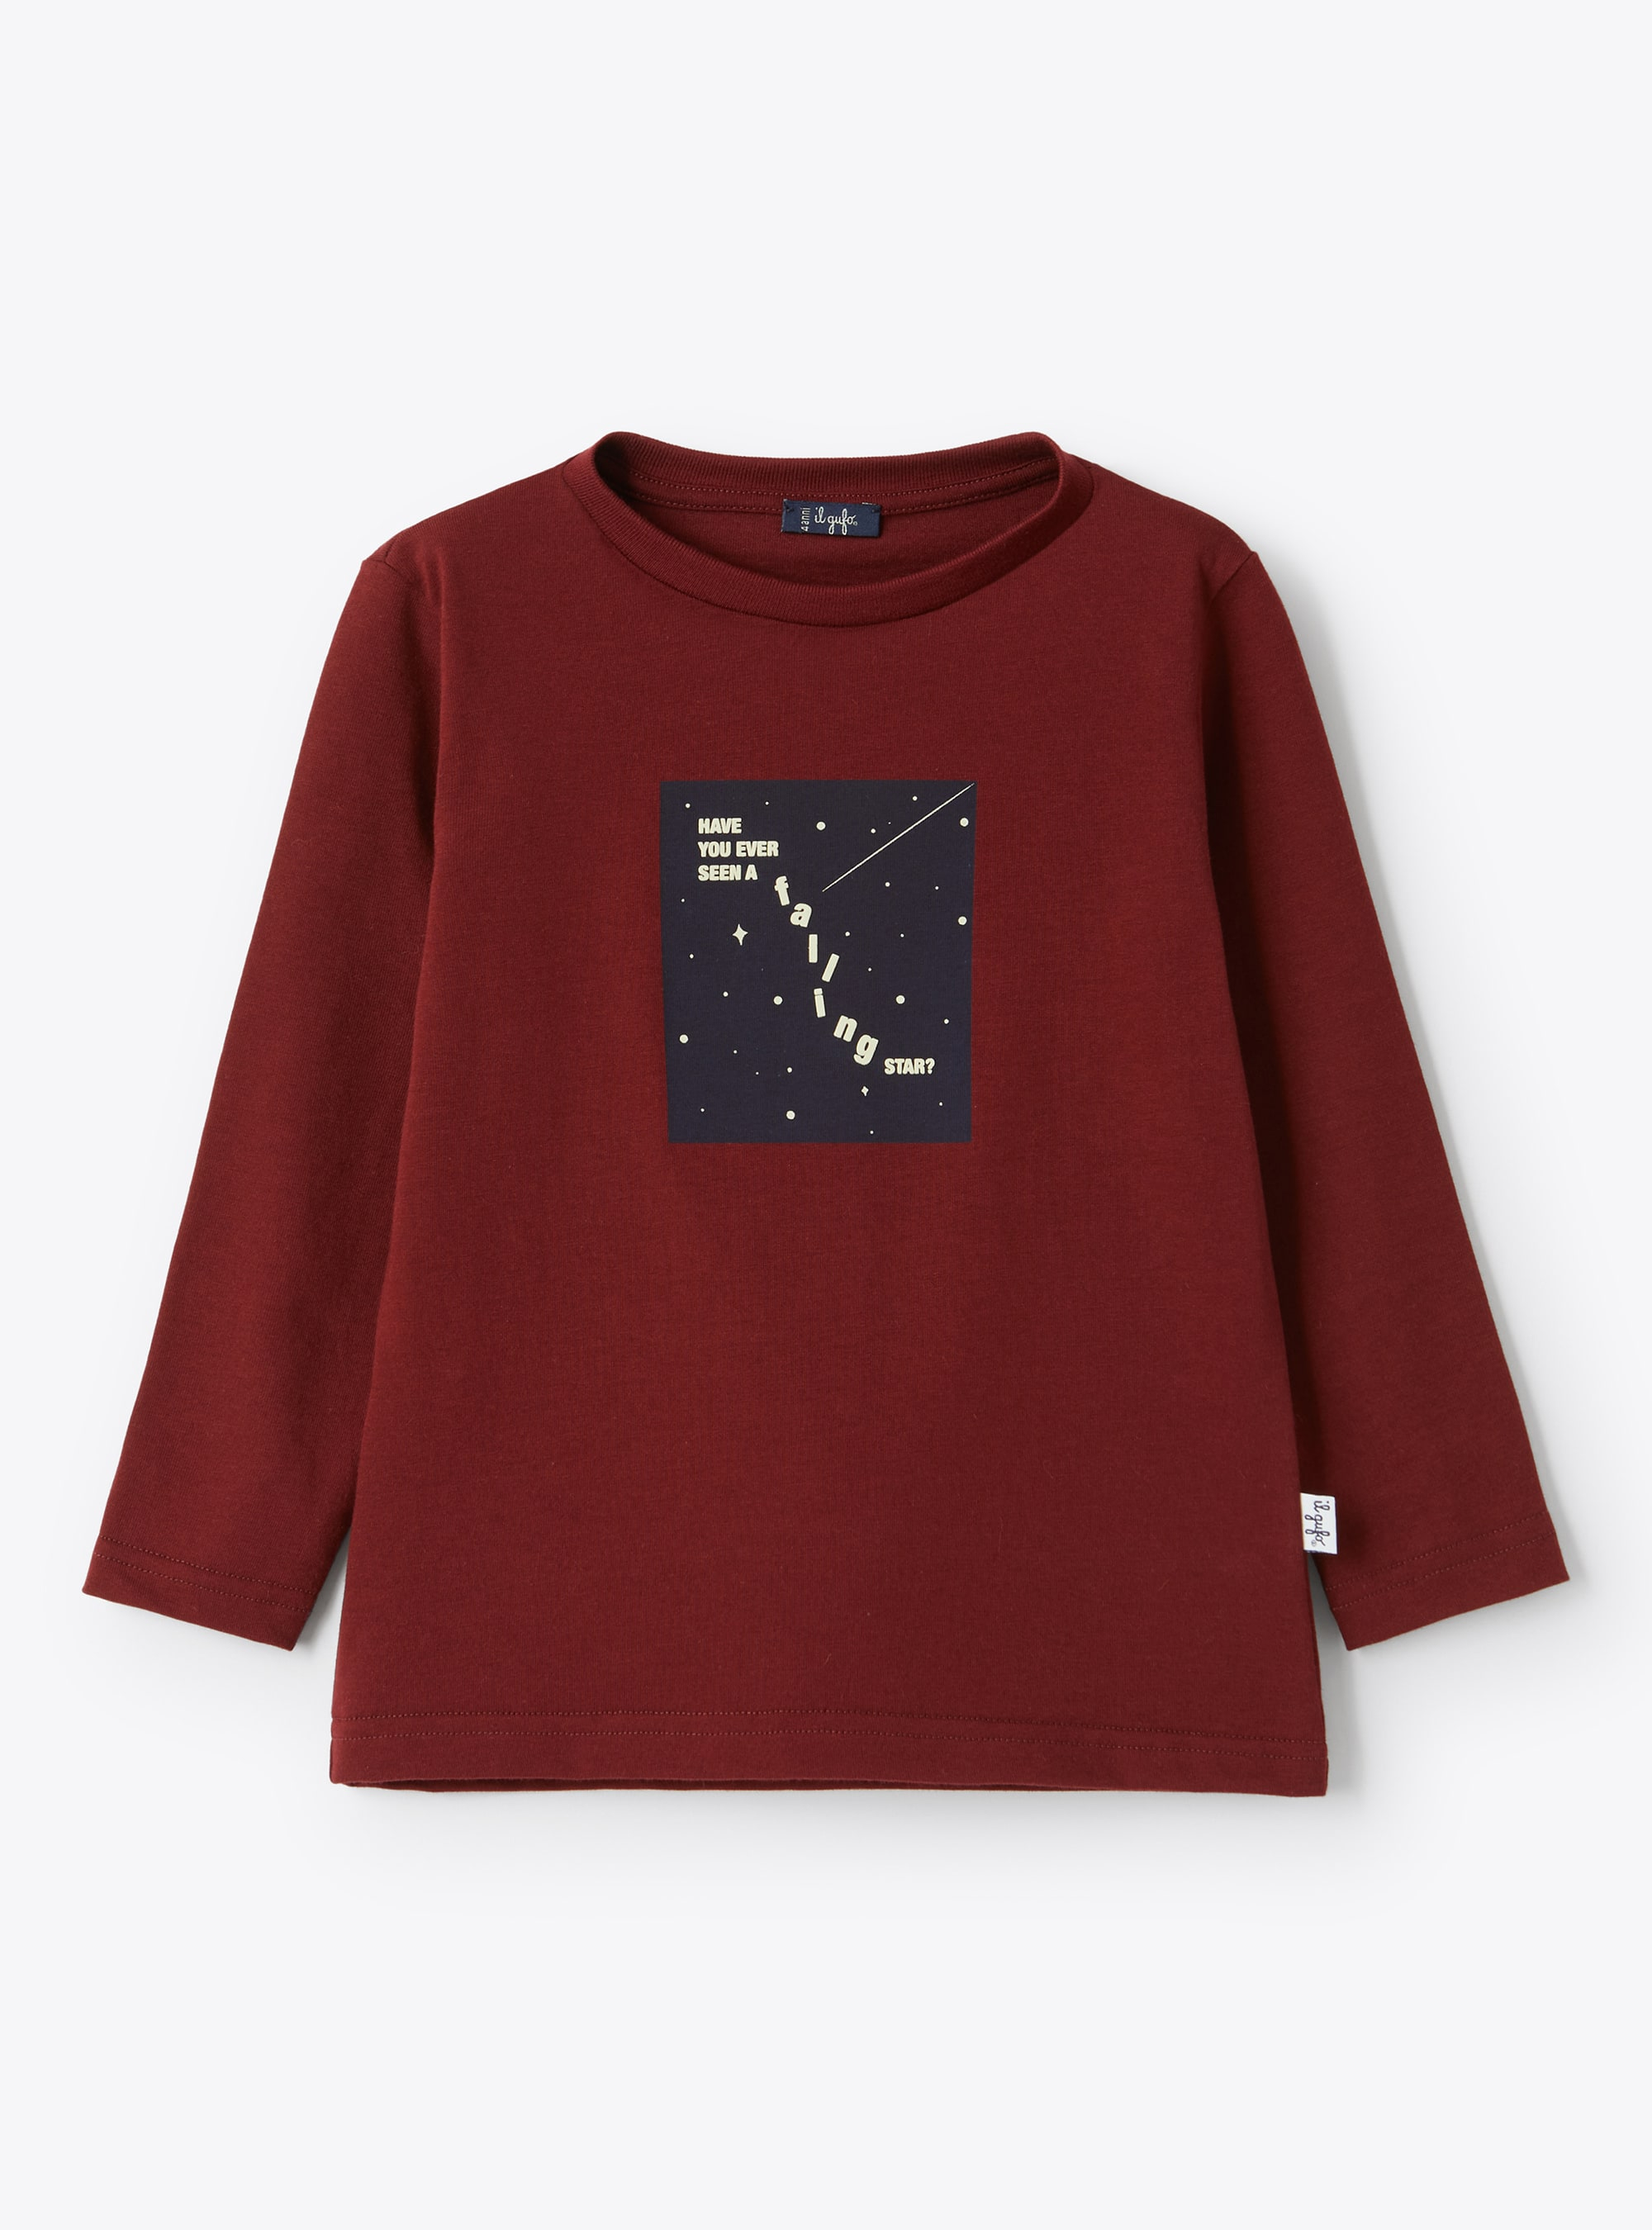 Bordeauxfarbenes T-Shirt mit Sternenhimmel-Aufdruck - T-shirts - Il Gufo